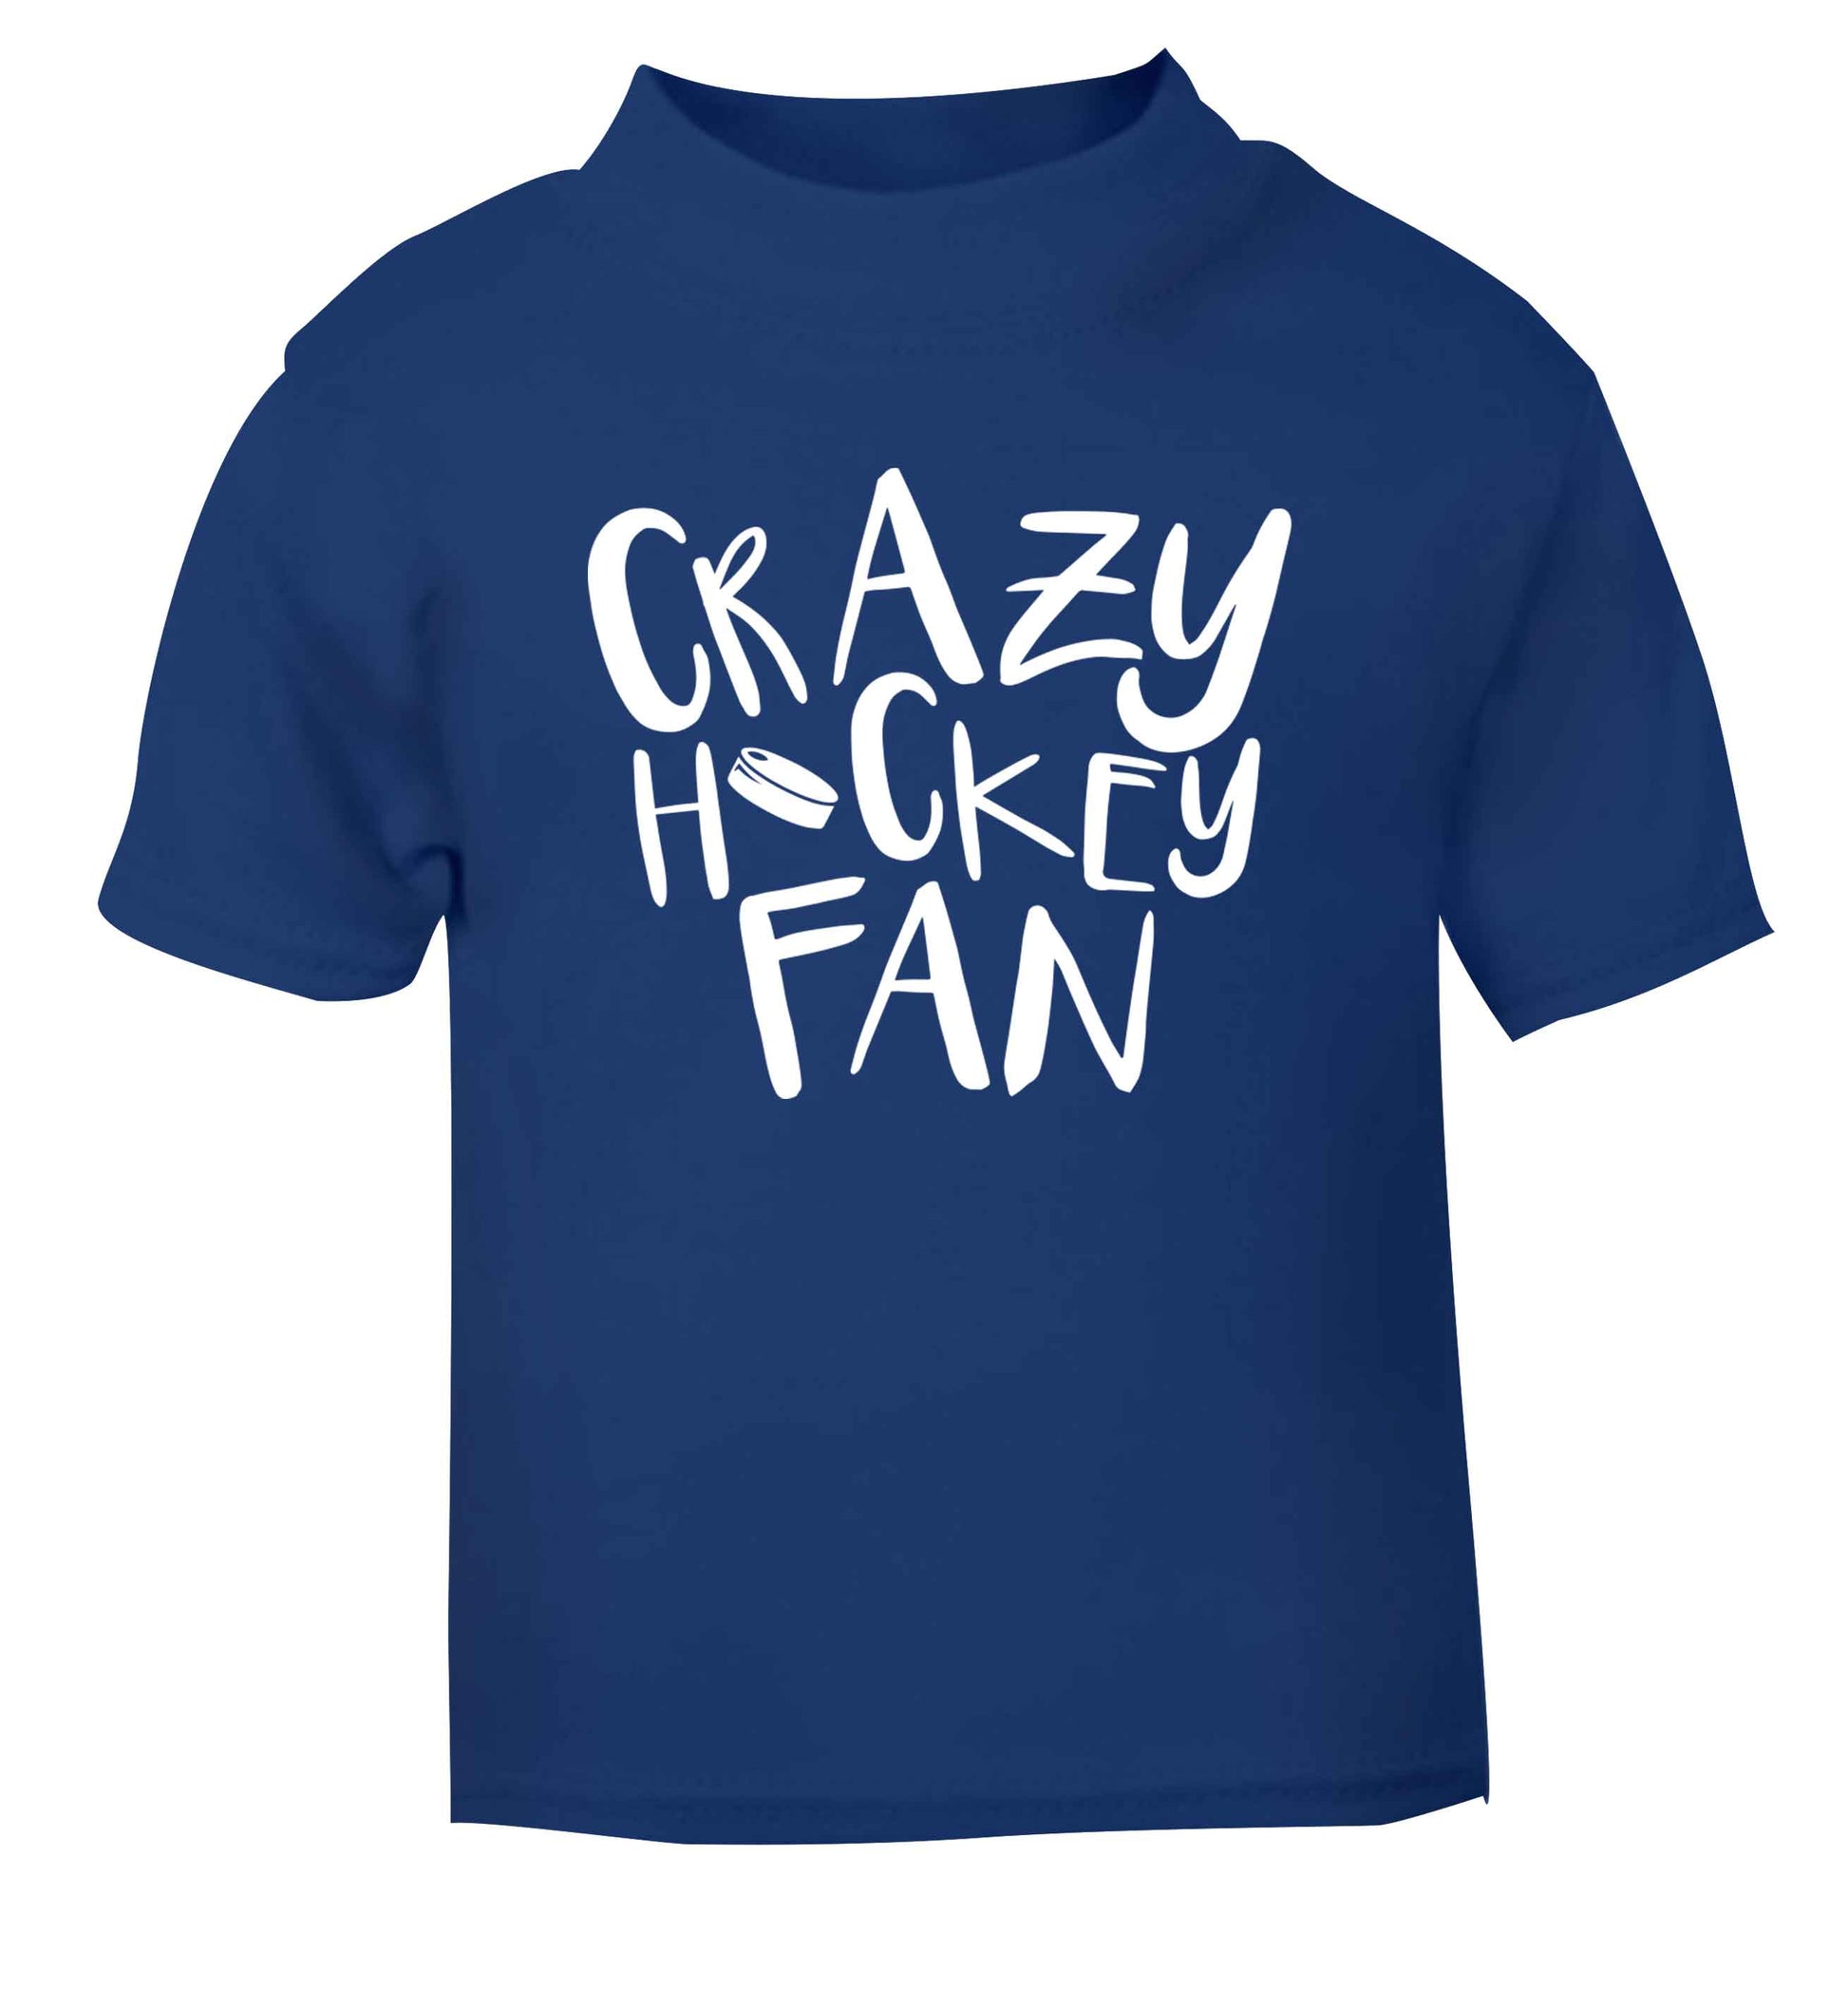 Crazy hockey fan blue Baby Toddler Tshirt 2 Years